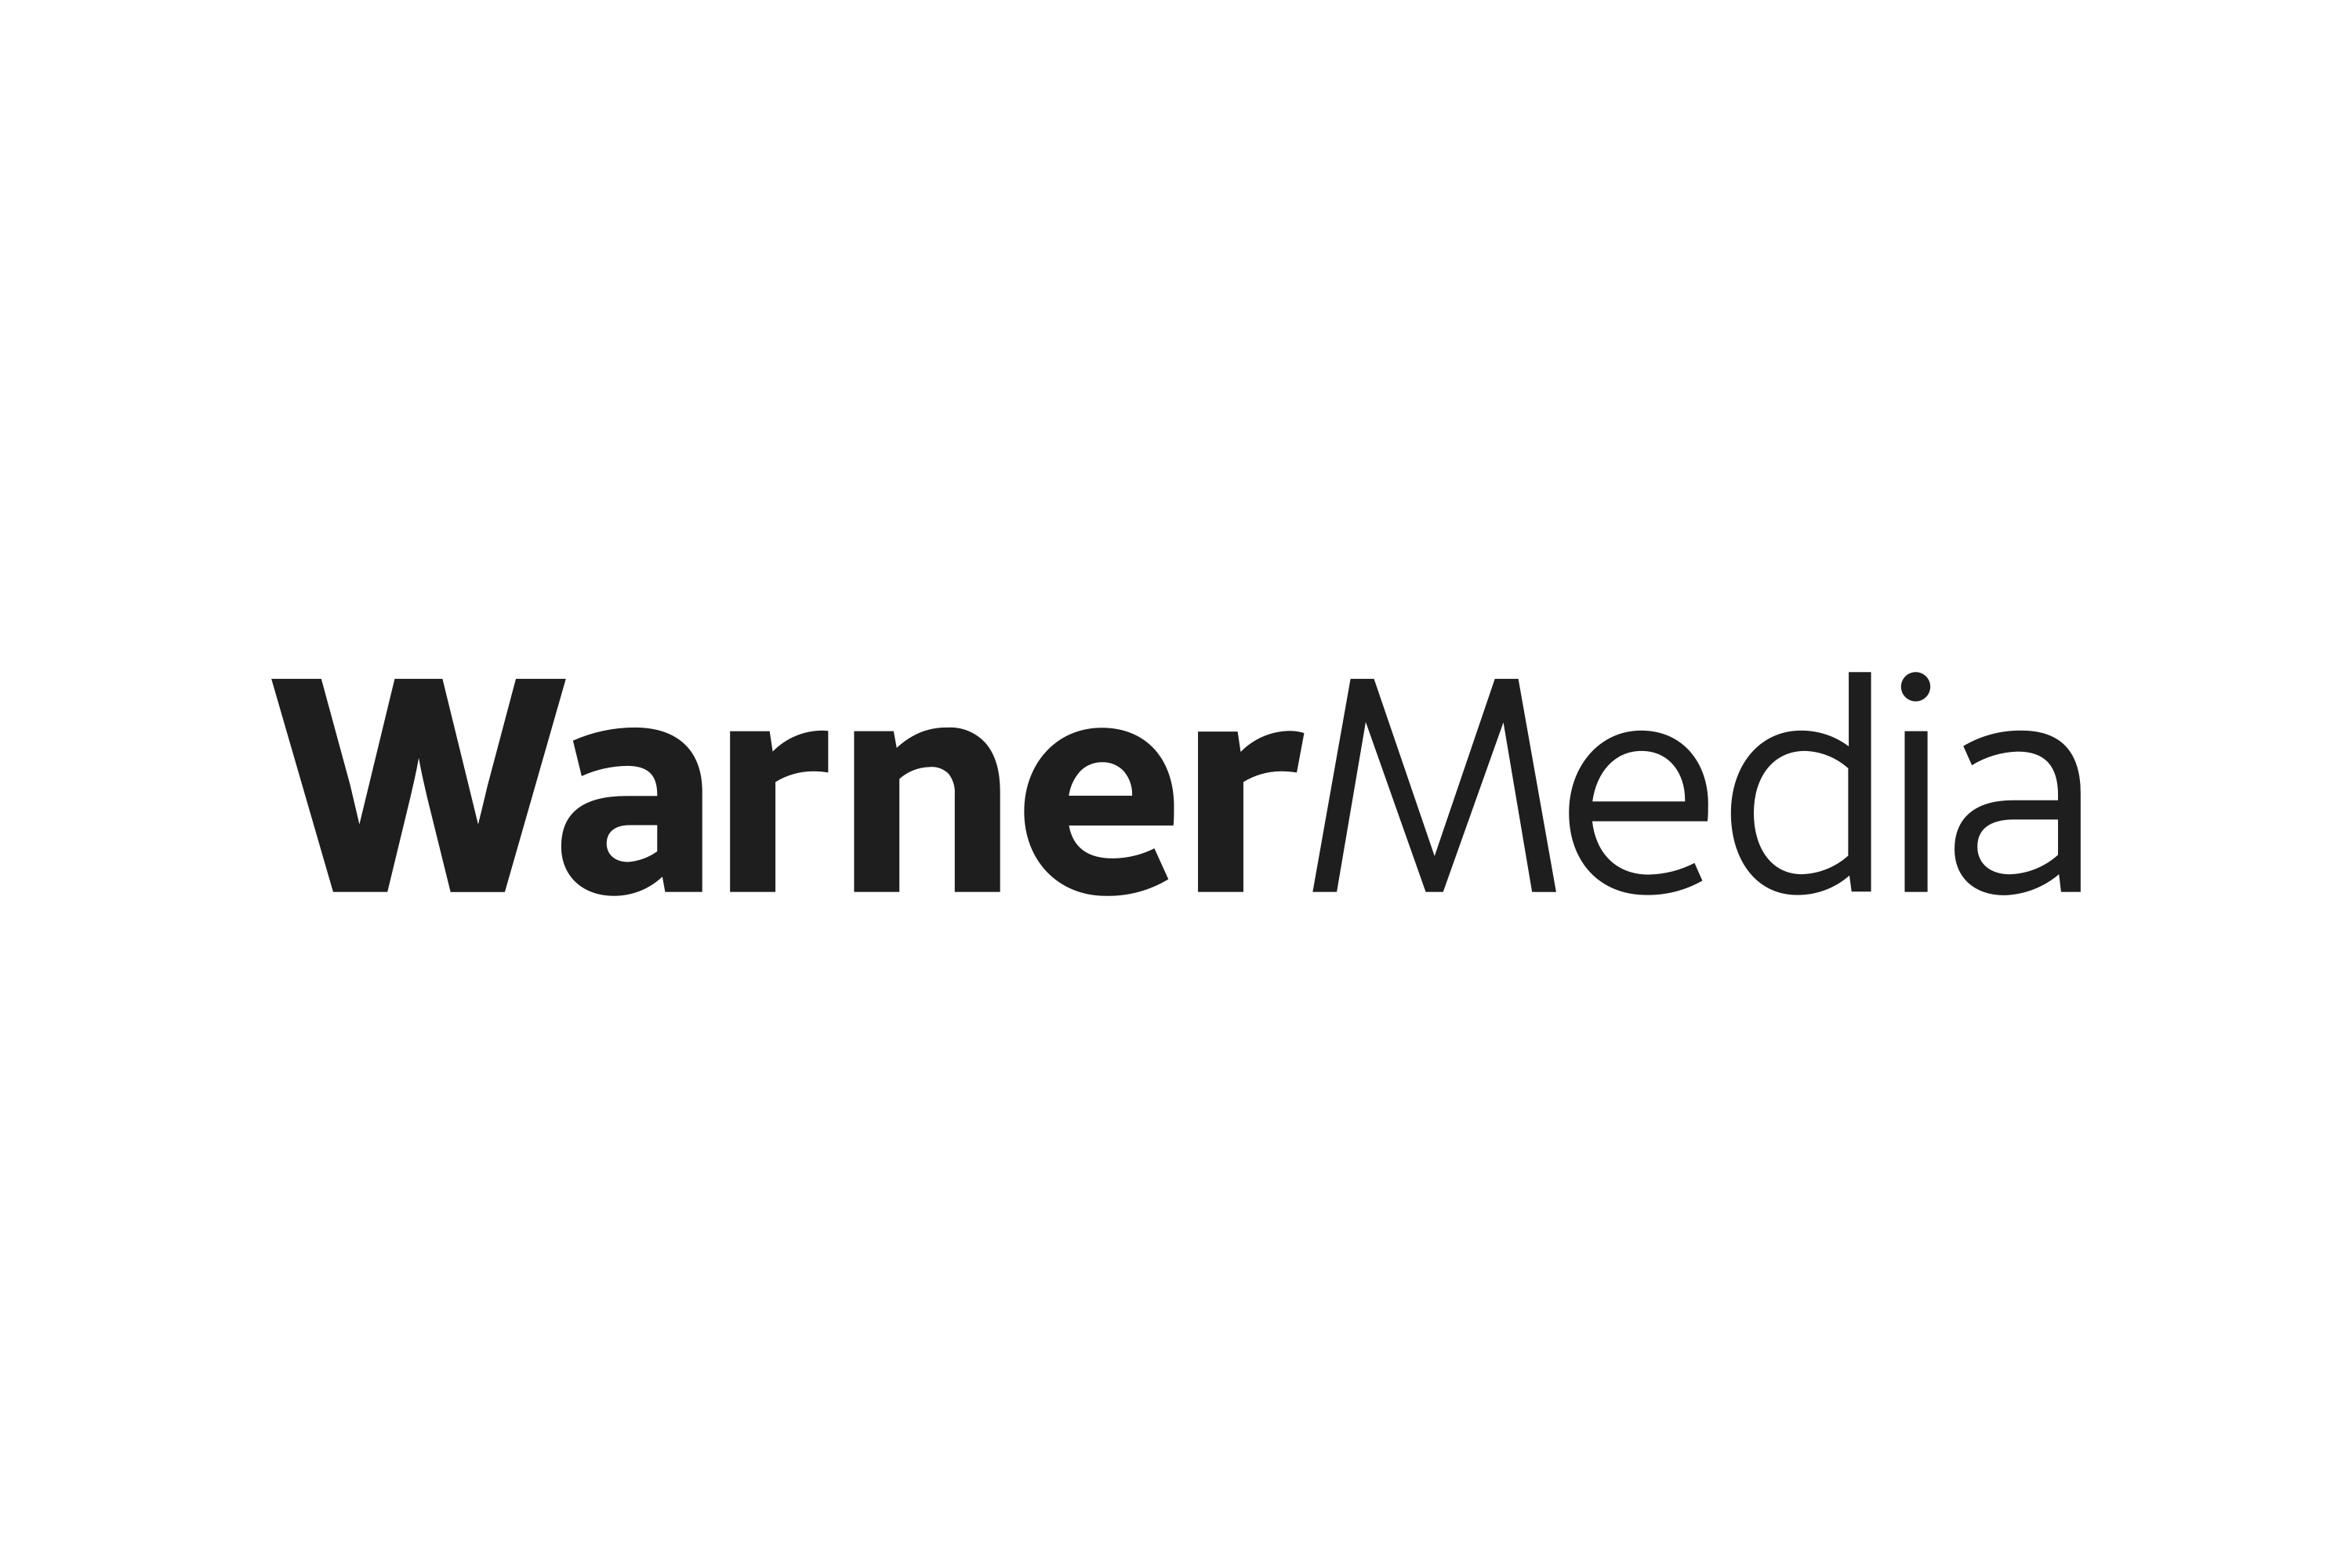 Download WarnerMedia Logo in SVG Vector or PNG File Format - Logo.wine